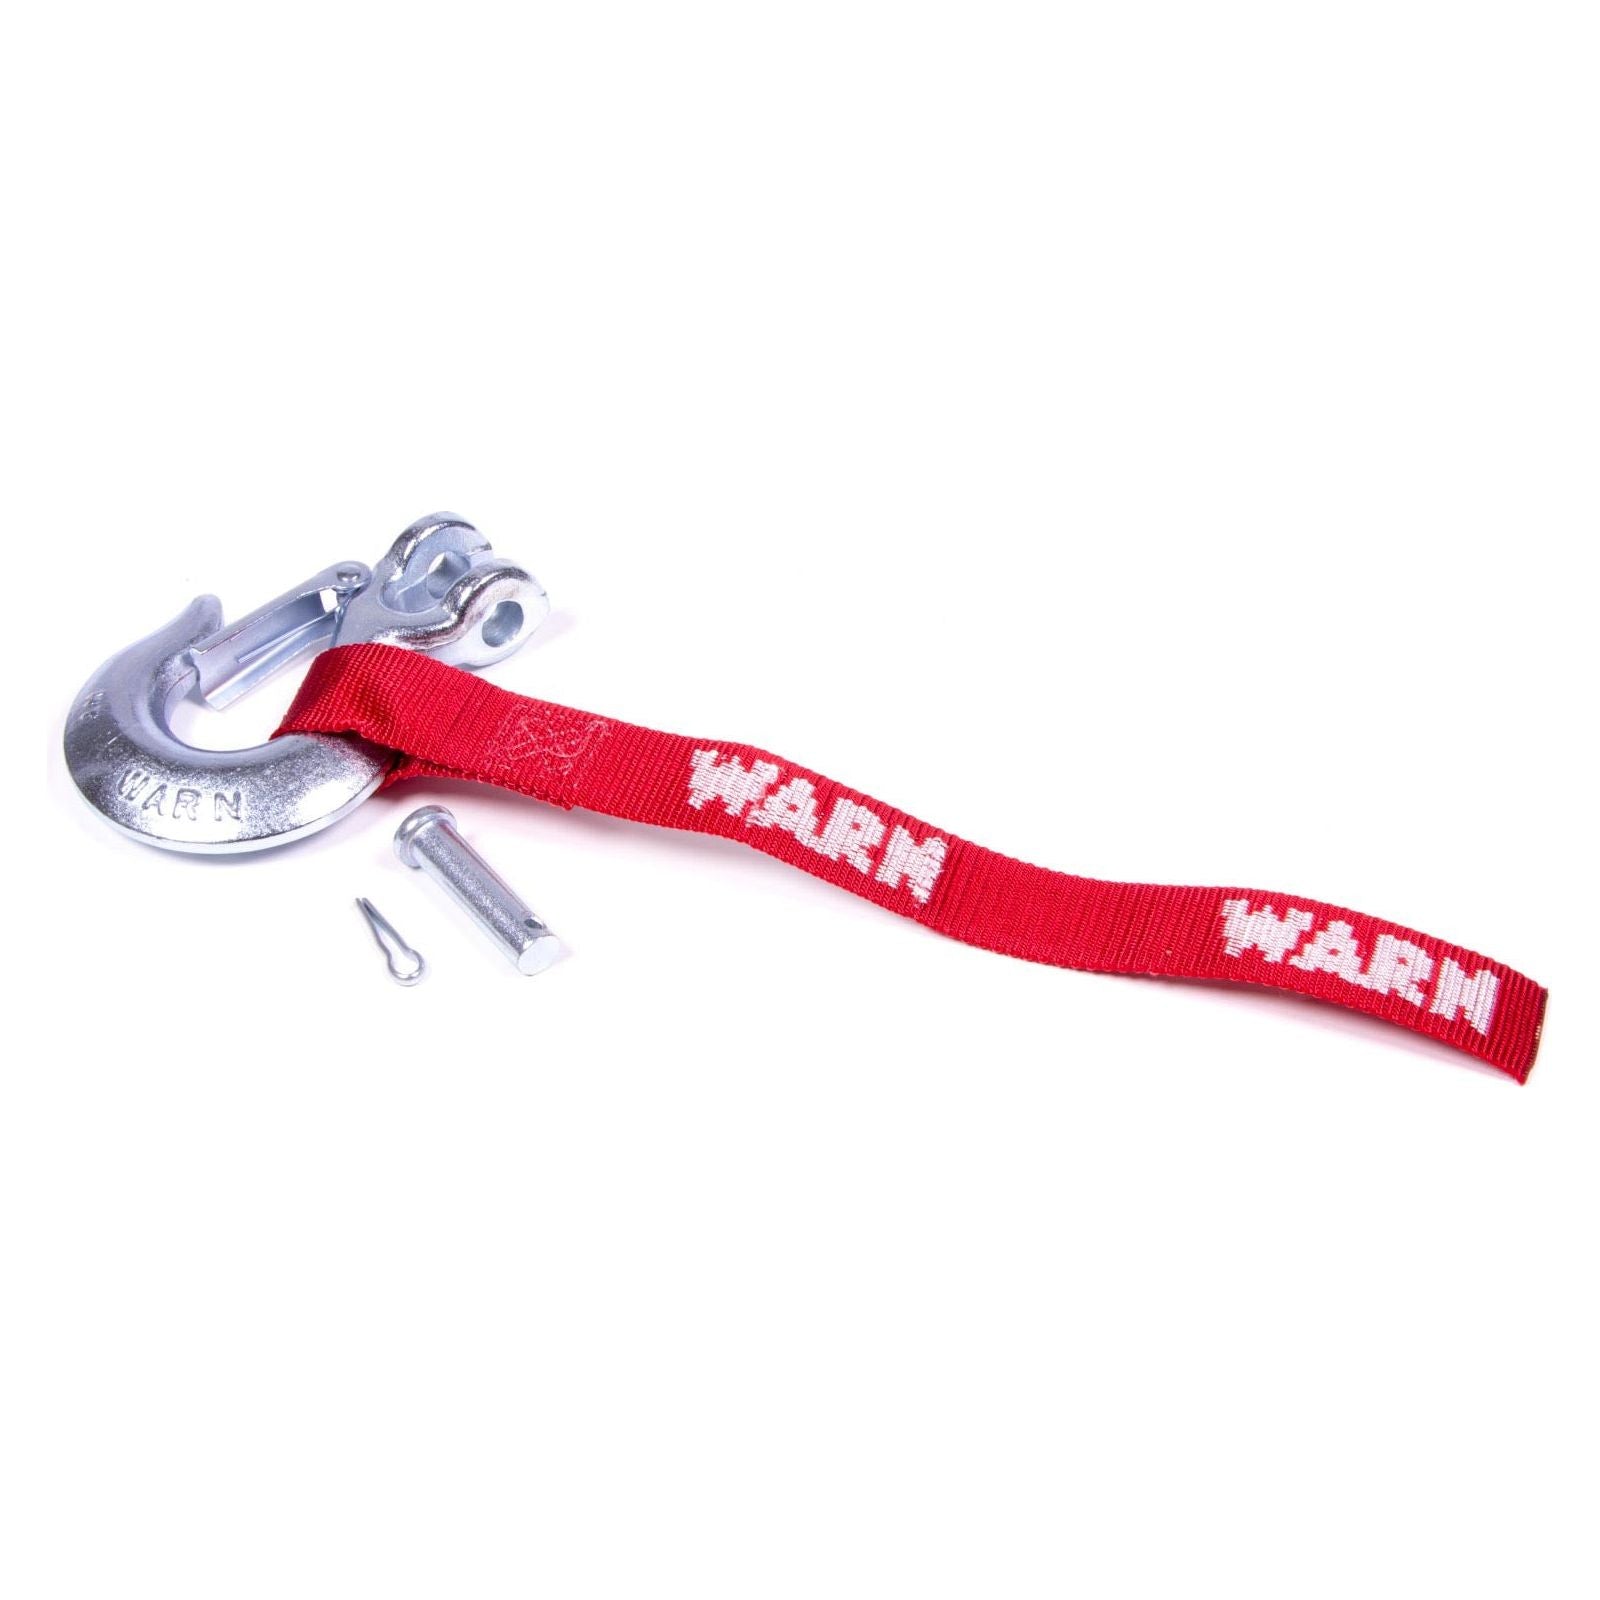 WARN 39557 - Hook and Strap Kit